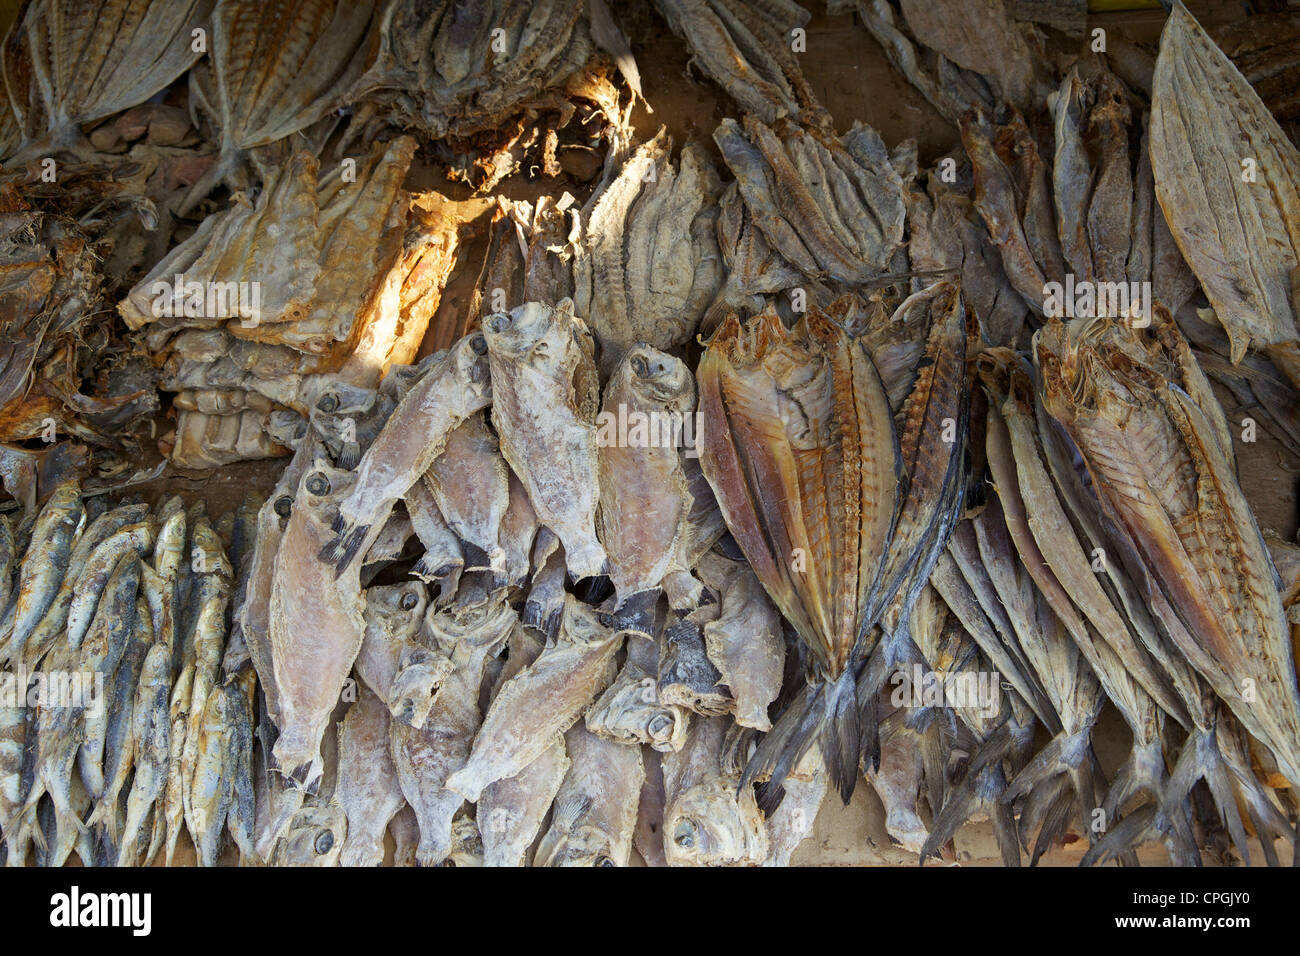 Market stall selling dried fish, Nilaveli, Trincomalee, Sri Lanka, Asia Stock Photo